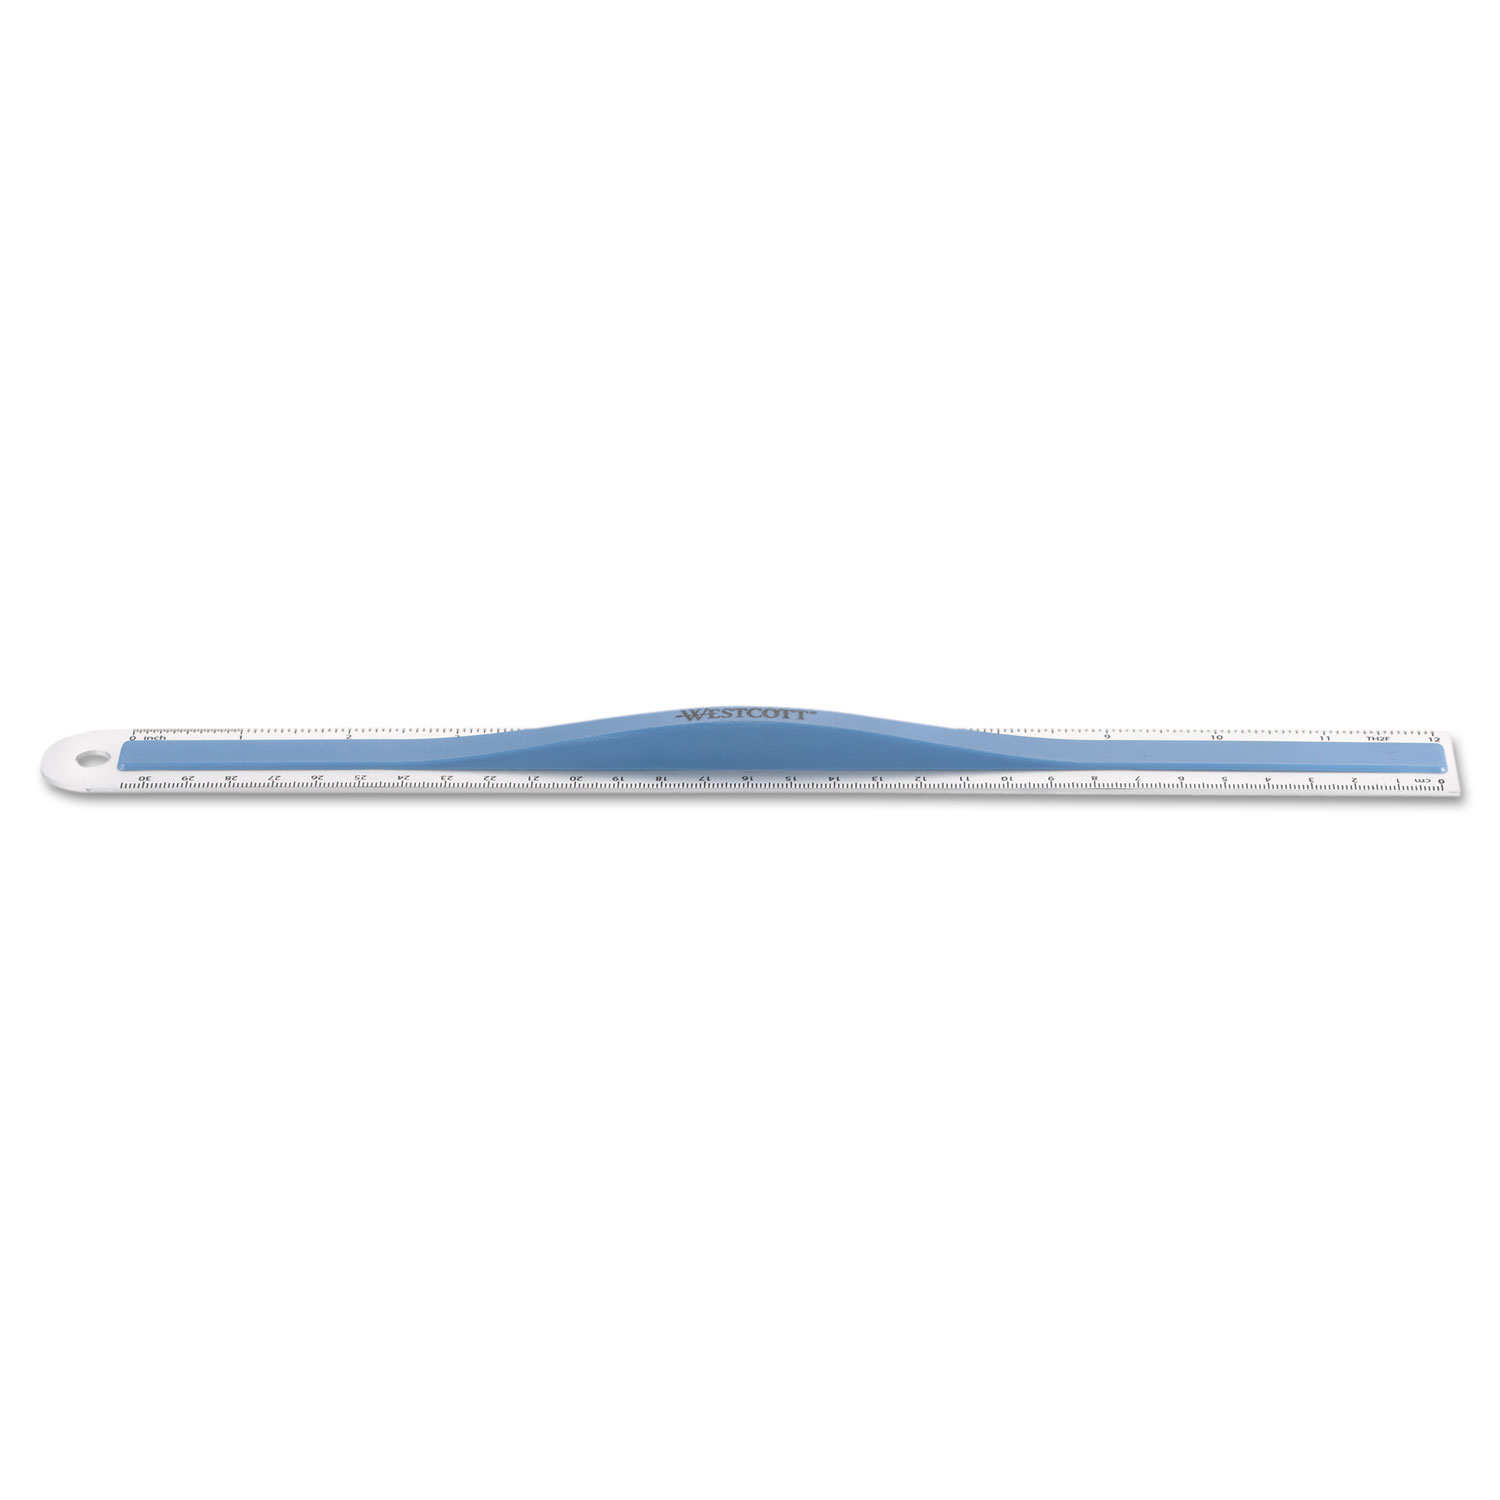 12 Aluminum Ruler with Finger Grip, Standard/Metric, Blue